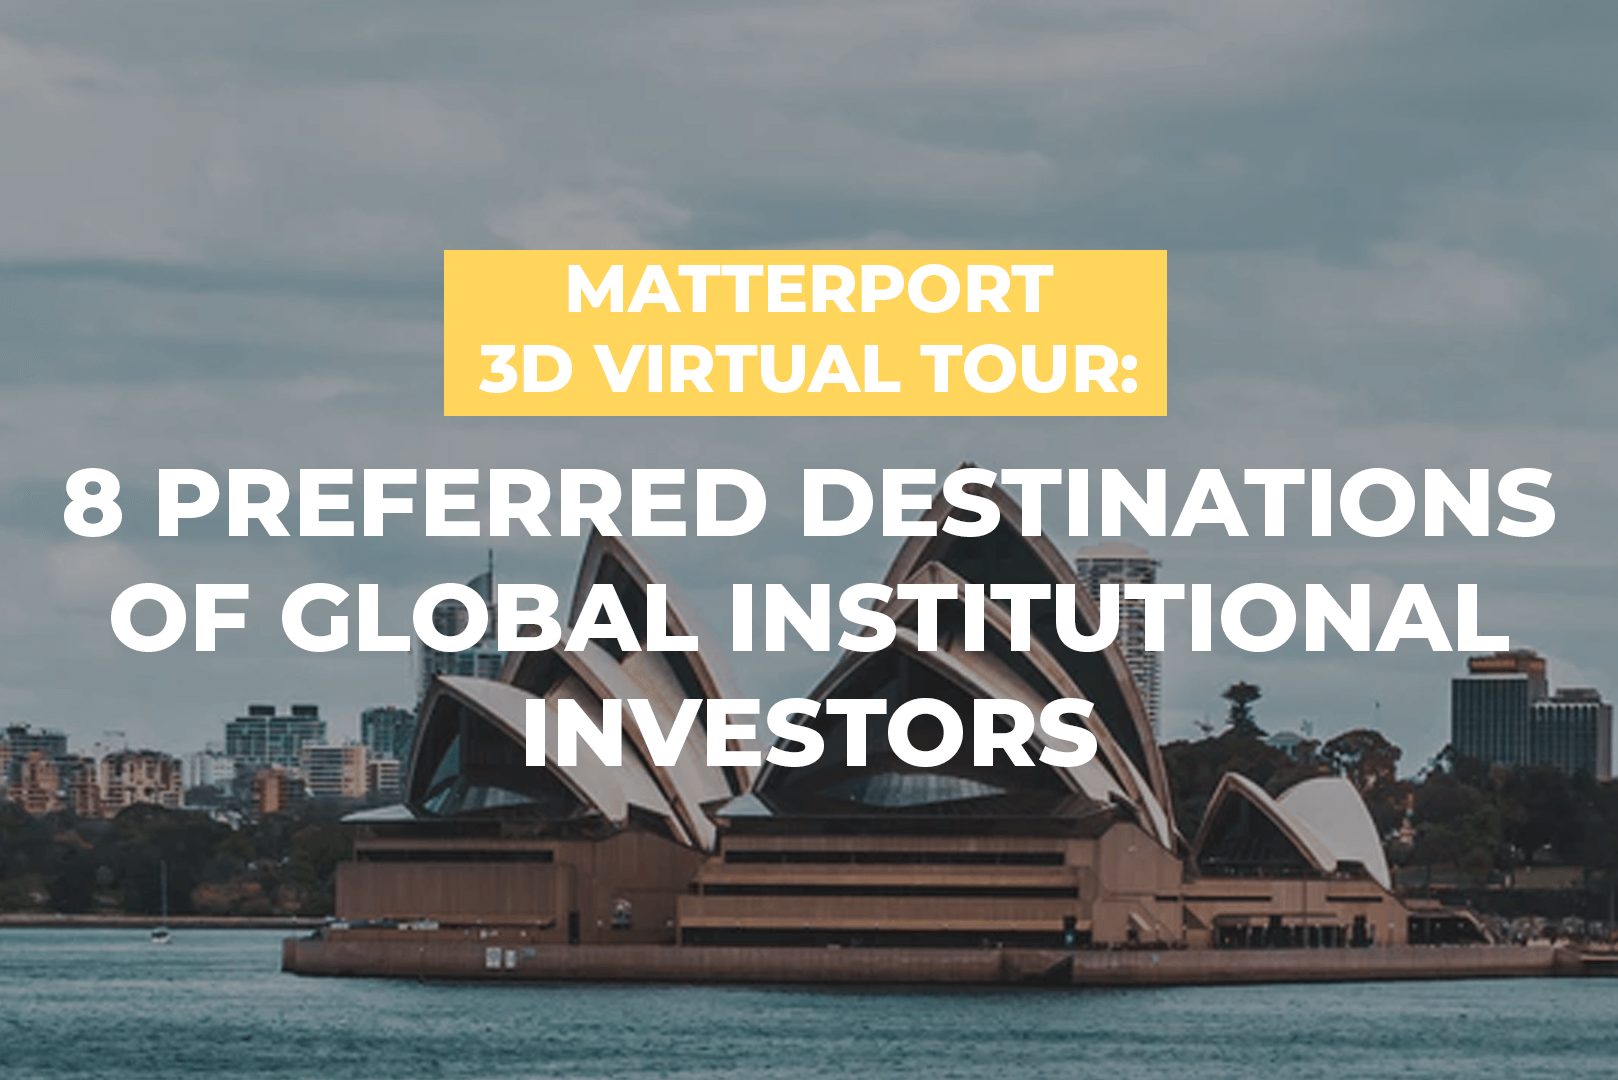 Matterport 3D Virtual Tour: 8 Preferred Destinations Of Global Institutional Investors